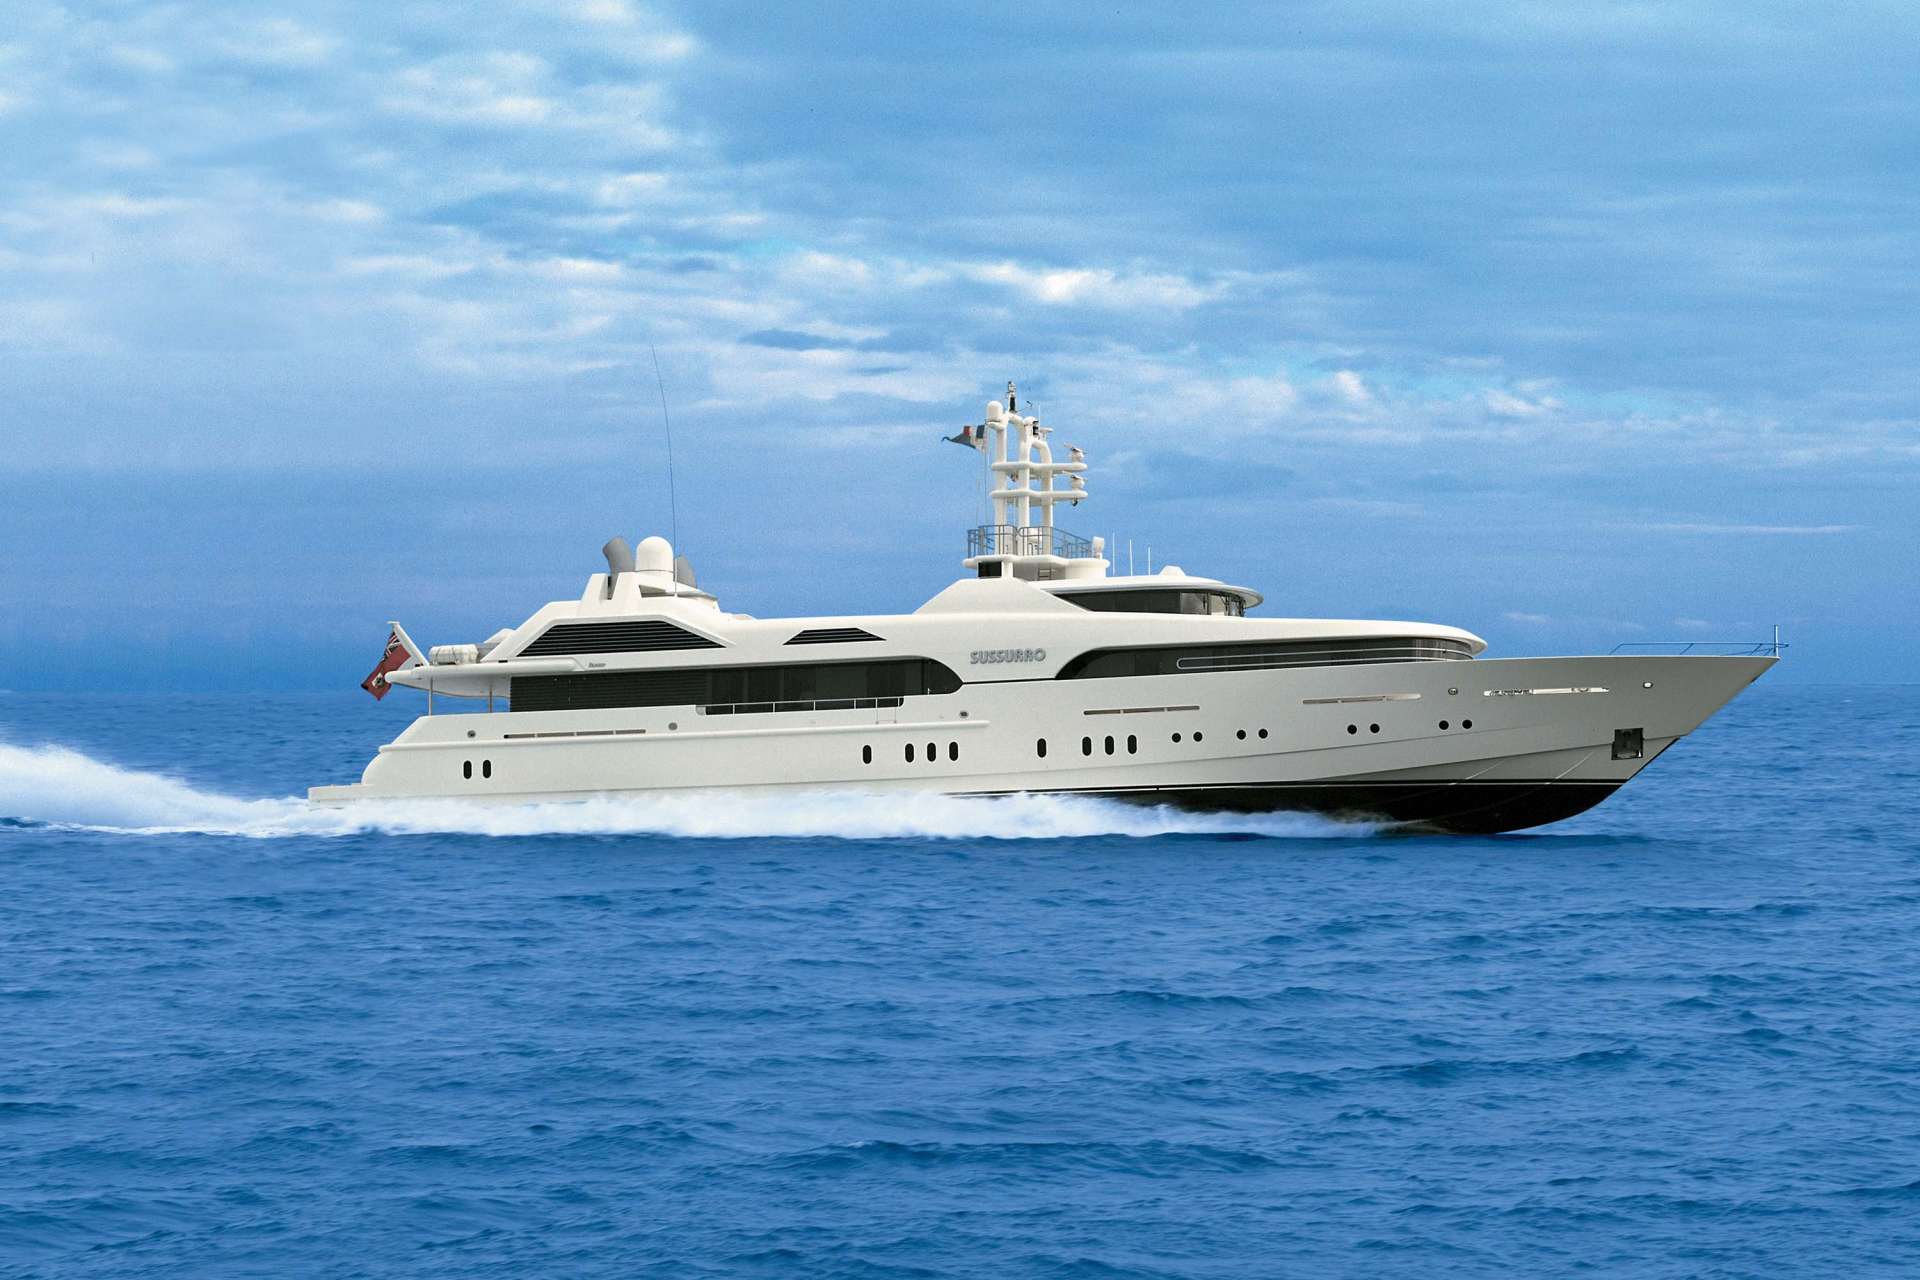 SUSSURRO Yacht • Feadship • 1998 • Eigentümerin Irina Malandina